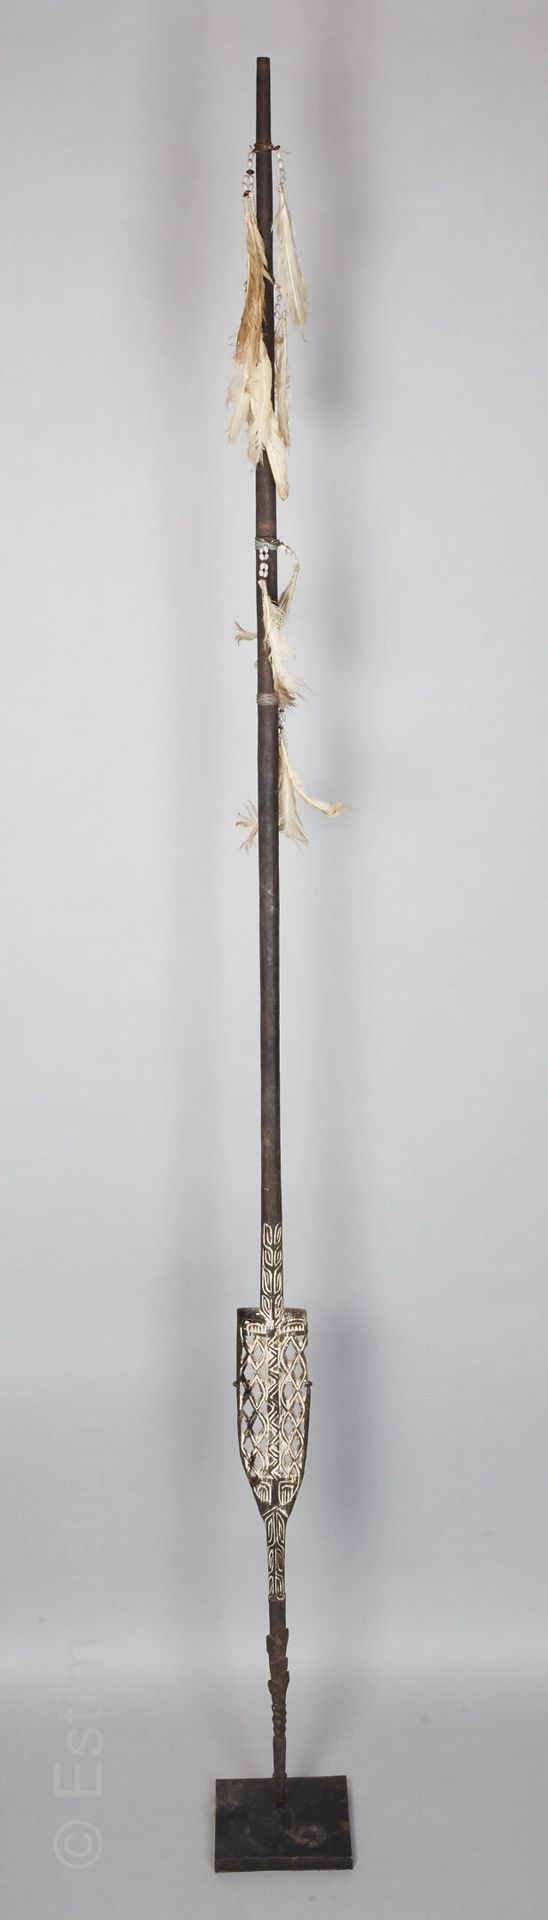 ASMAT - PAPOUASIE, NOUVELLE- GUINEE Asmat - 新几内亚巴布亚



铁木雕刻的仪式用矛，有镂空的装饰和卷轴的天然颜料，&hellip;